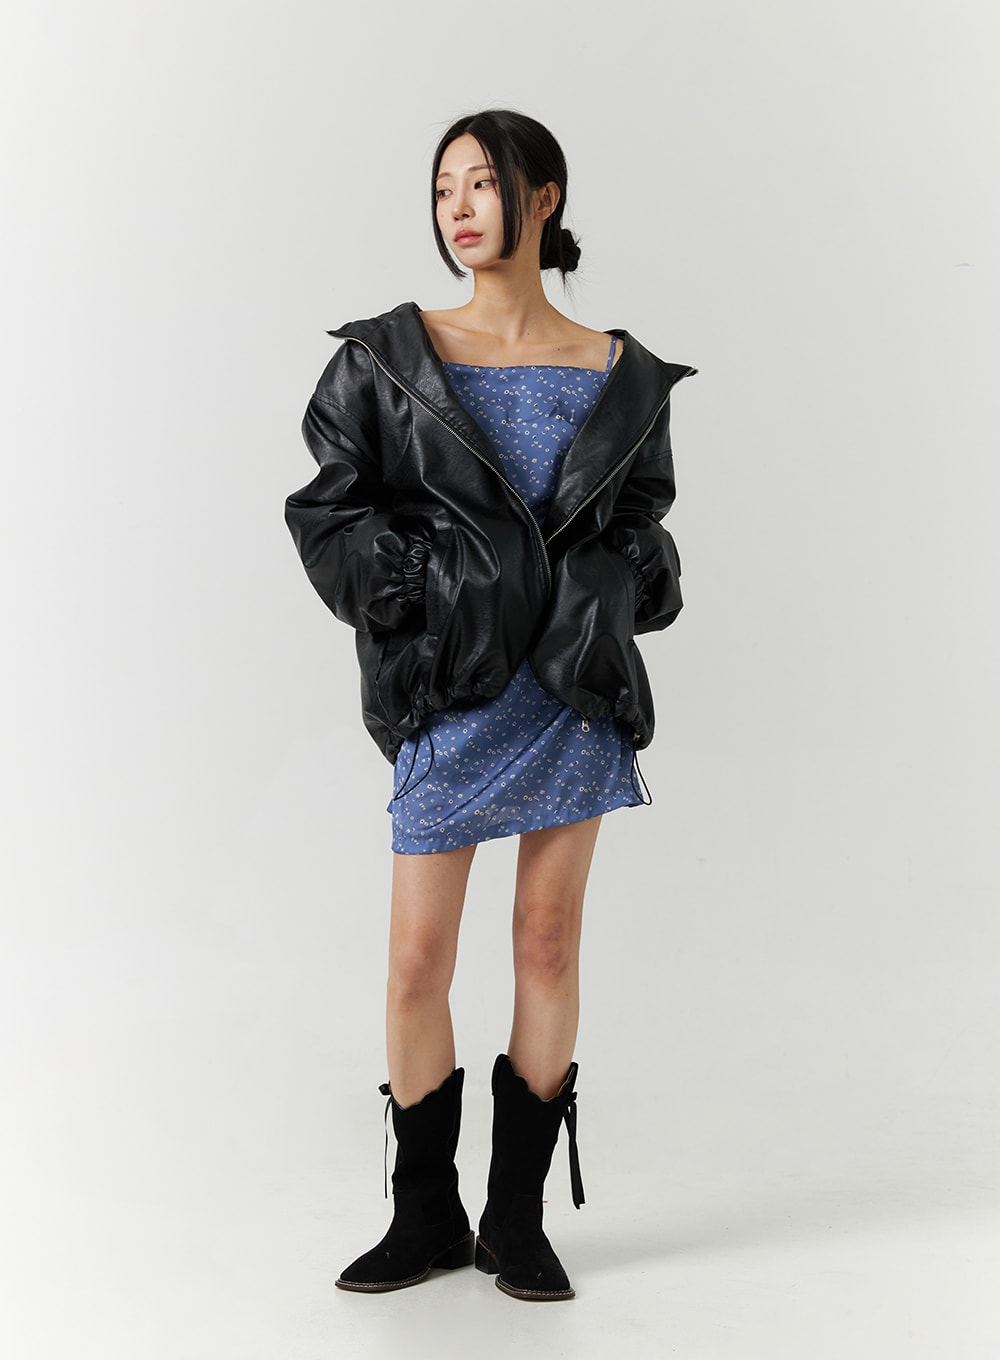 oversized-faux-leather-hooded-jacket-cn329